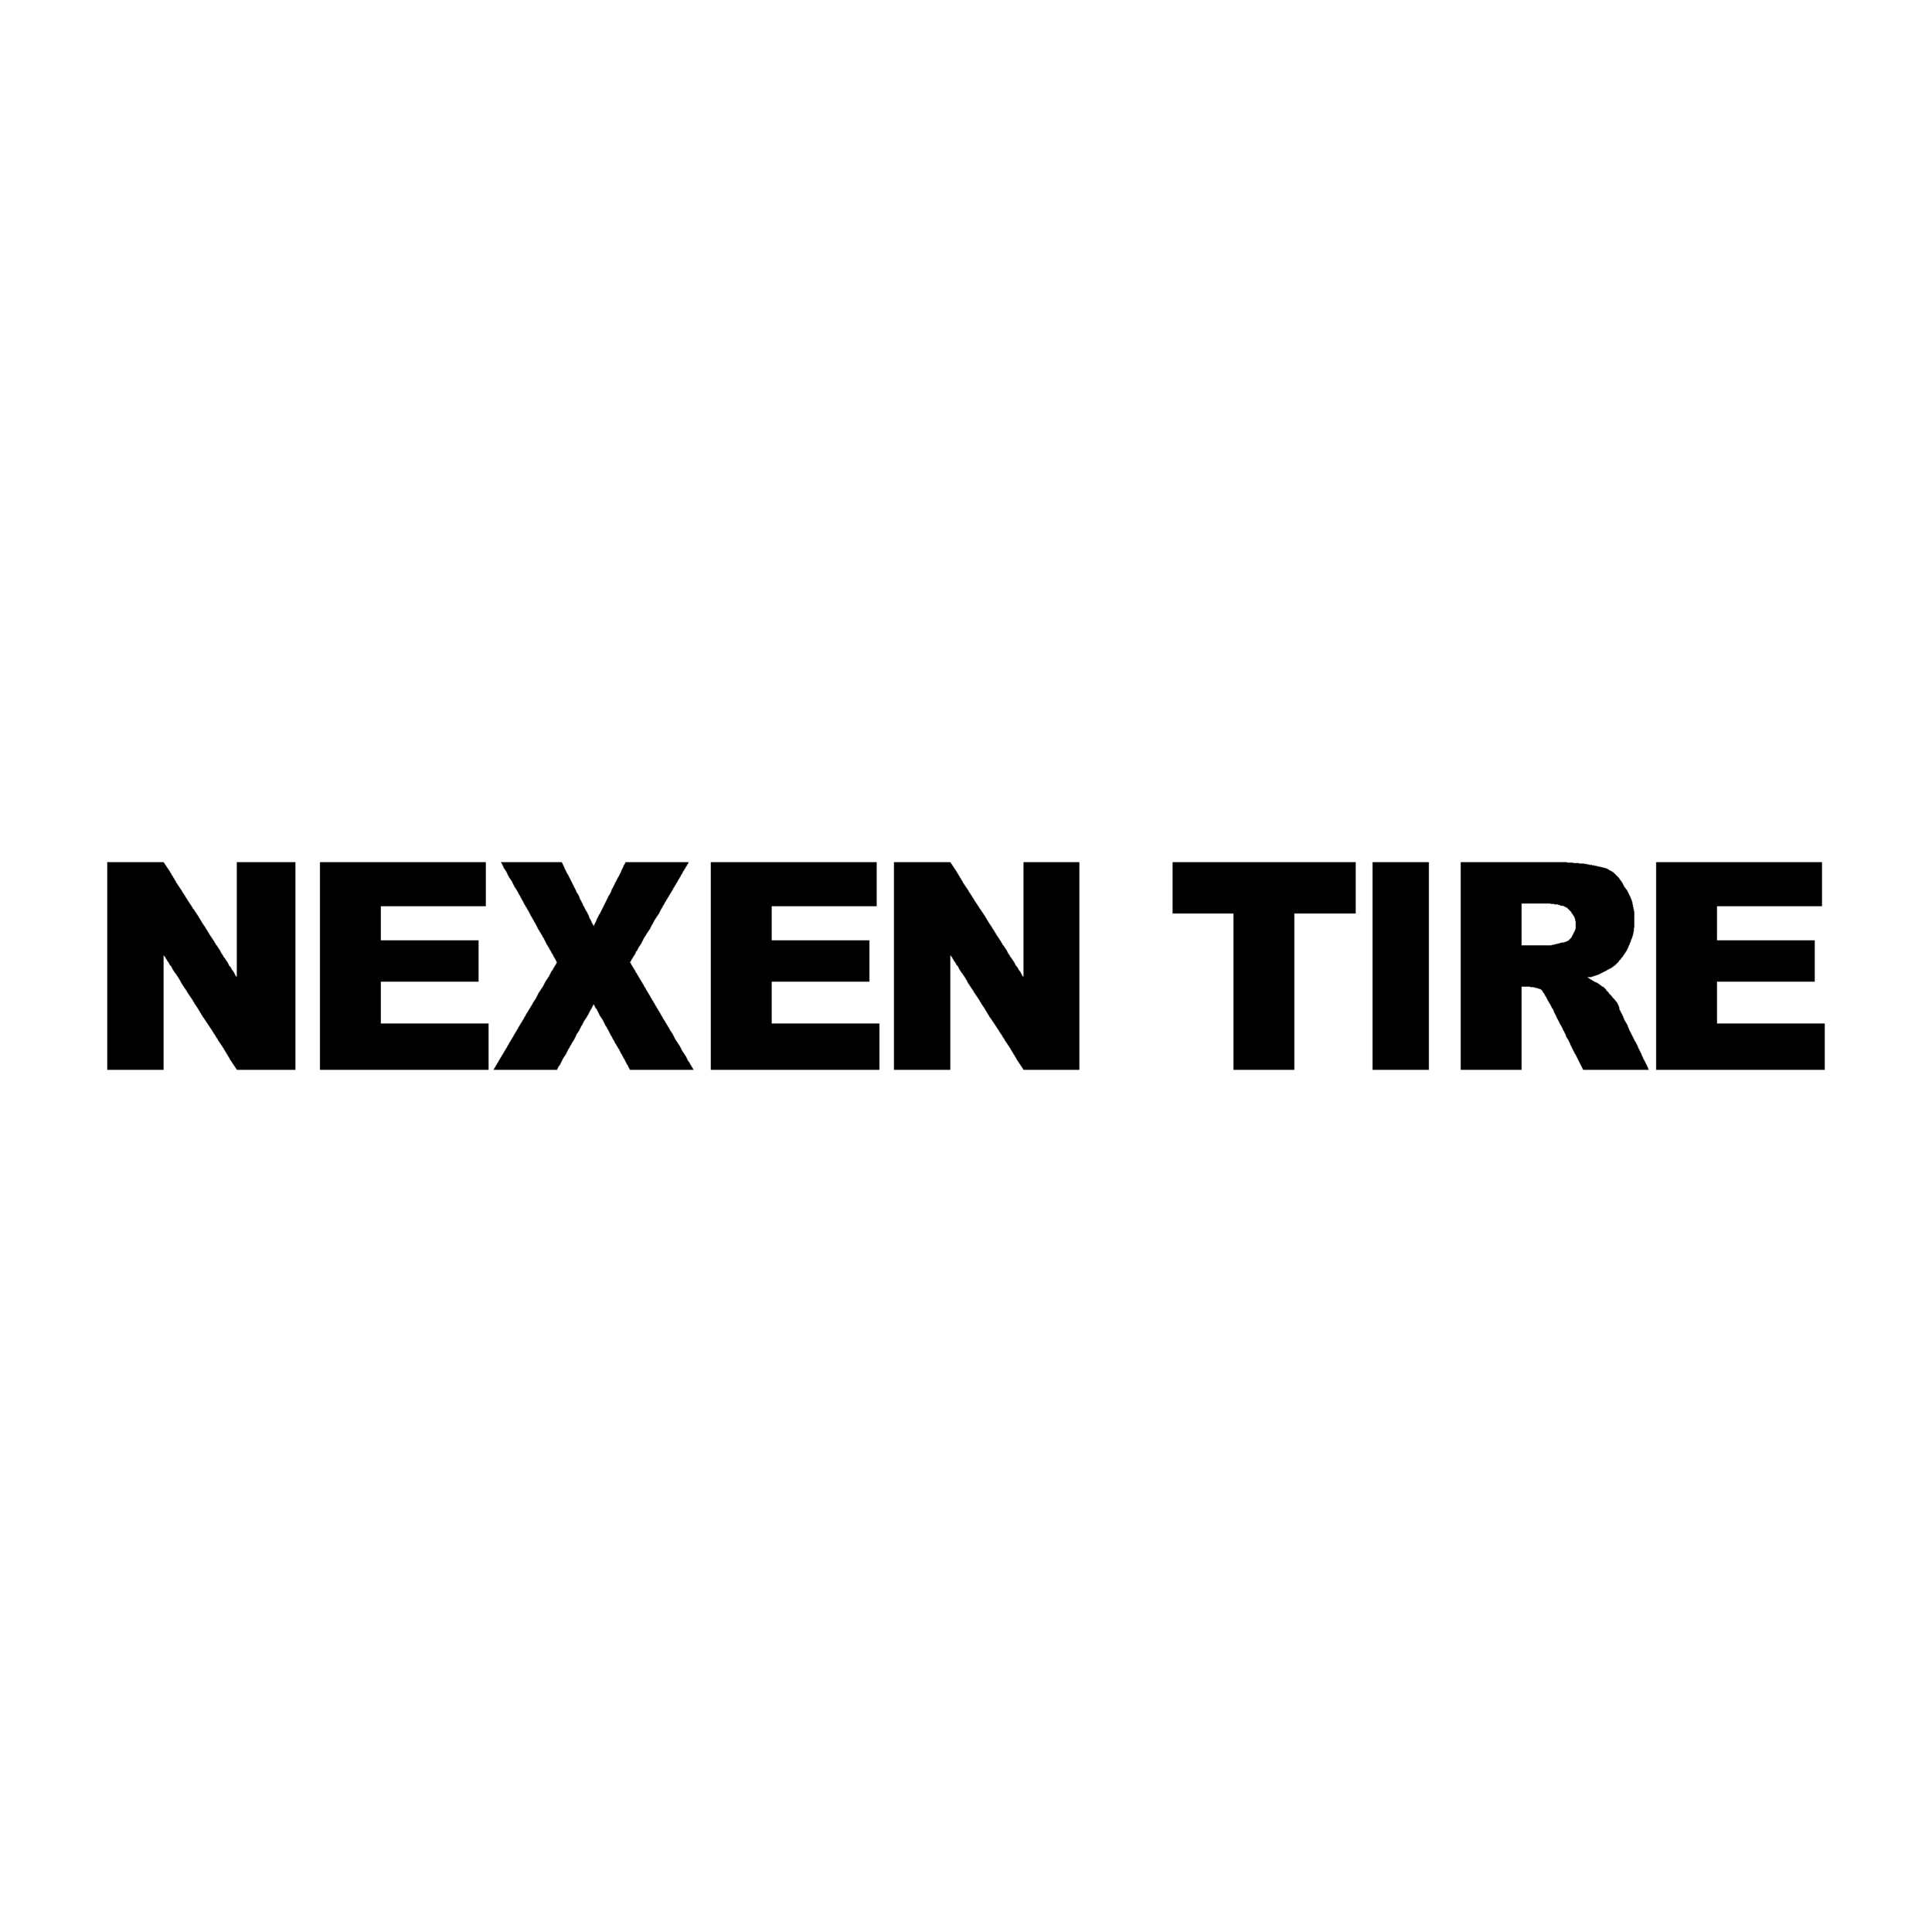 stickers-nexen-tire-ref-1-tuning-audio-4x4-tout-terrain-car-auto-moto-camion-competition-deco-rallye-autocollant-min